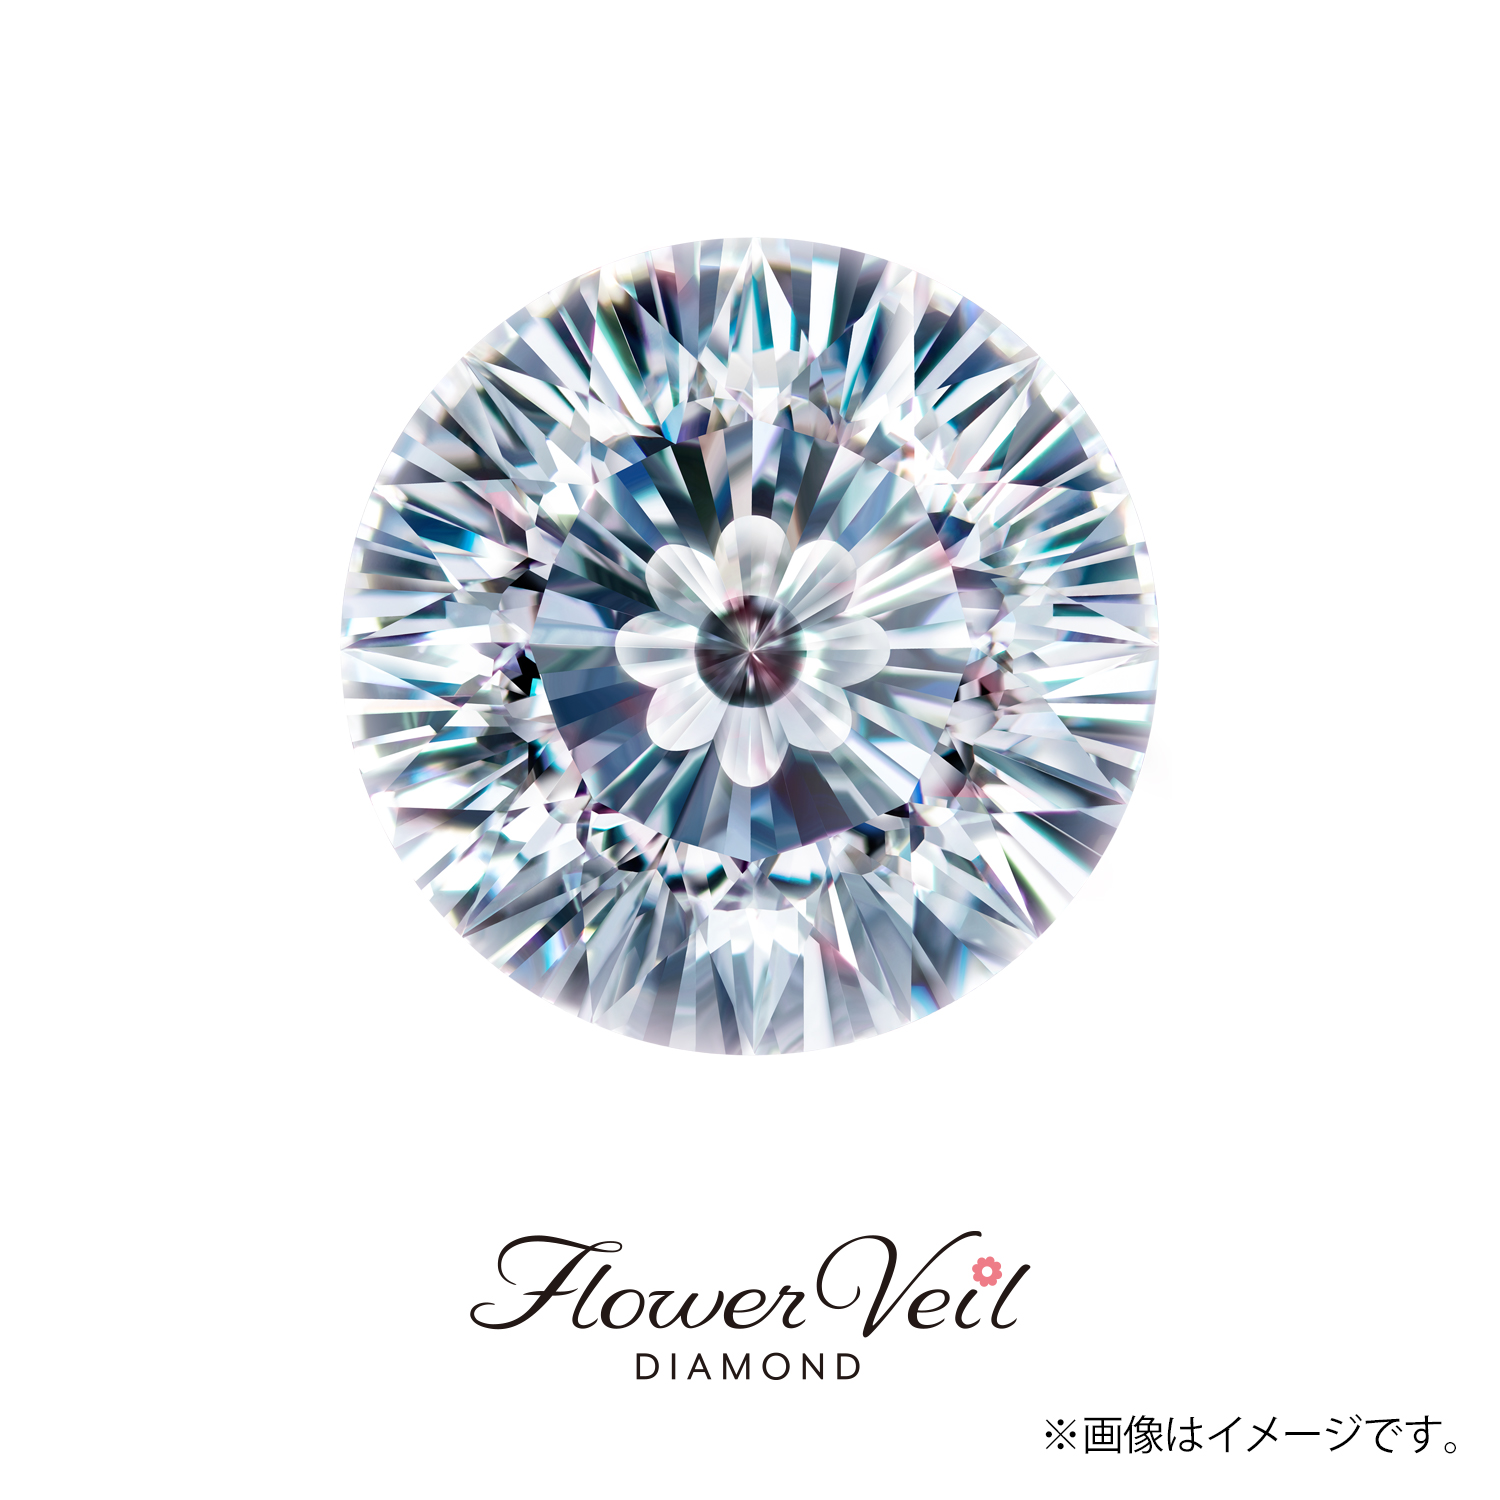 0.310ct Round ダイヤモンド / D / VS1 / FLOWER VEIL CUT